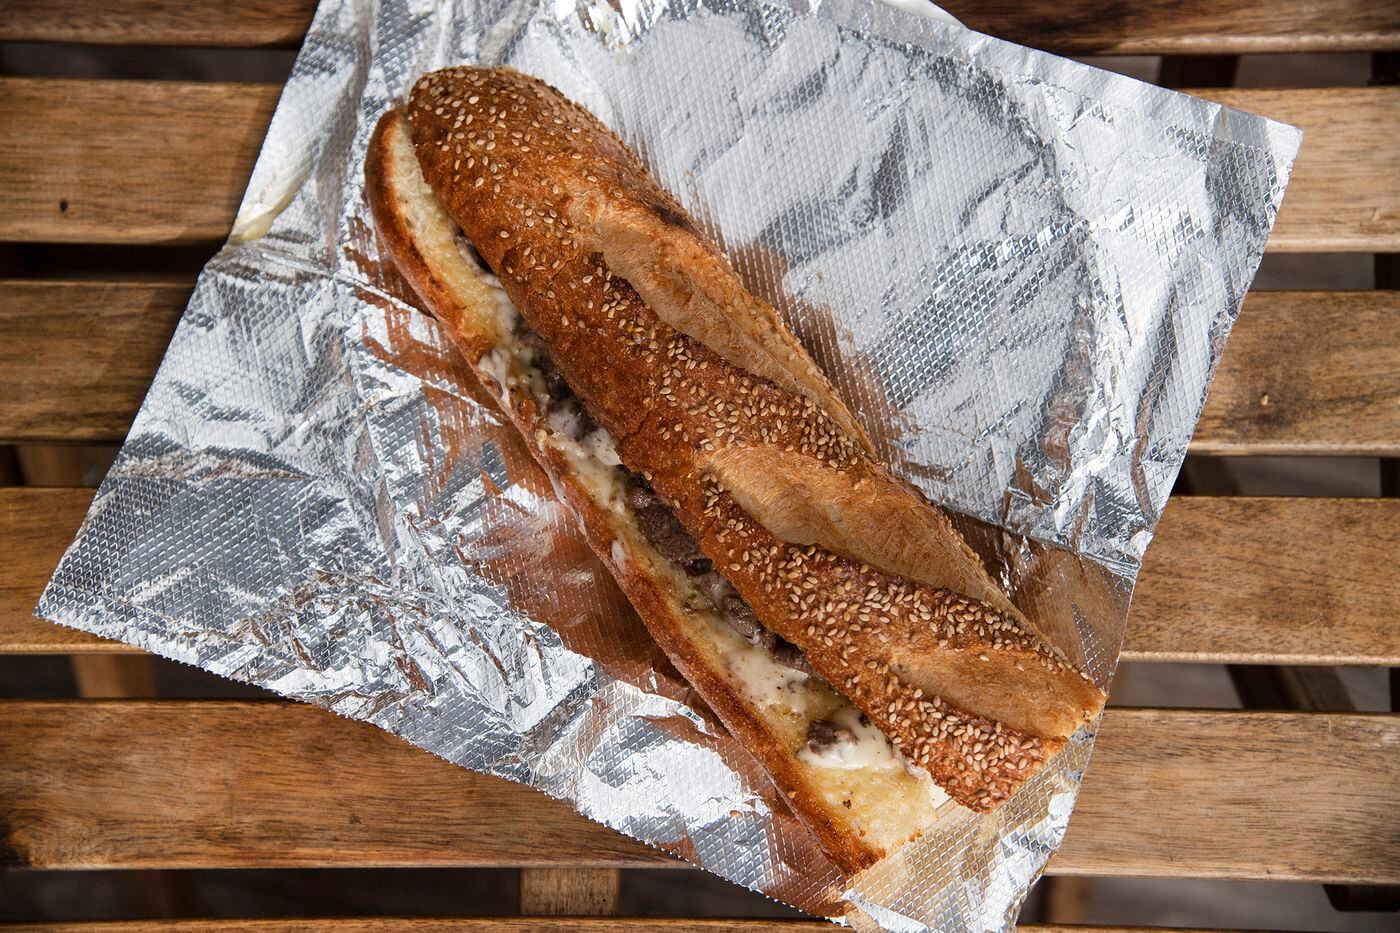 The Tony Head sandwich, which is steak on garlic bread, Angelo's Pizzeria South Philadelphia.